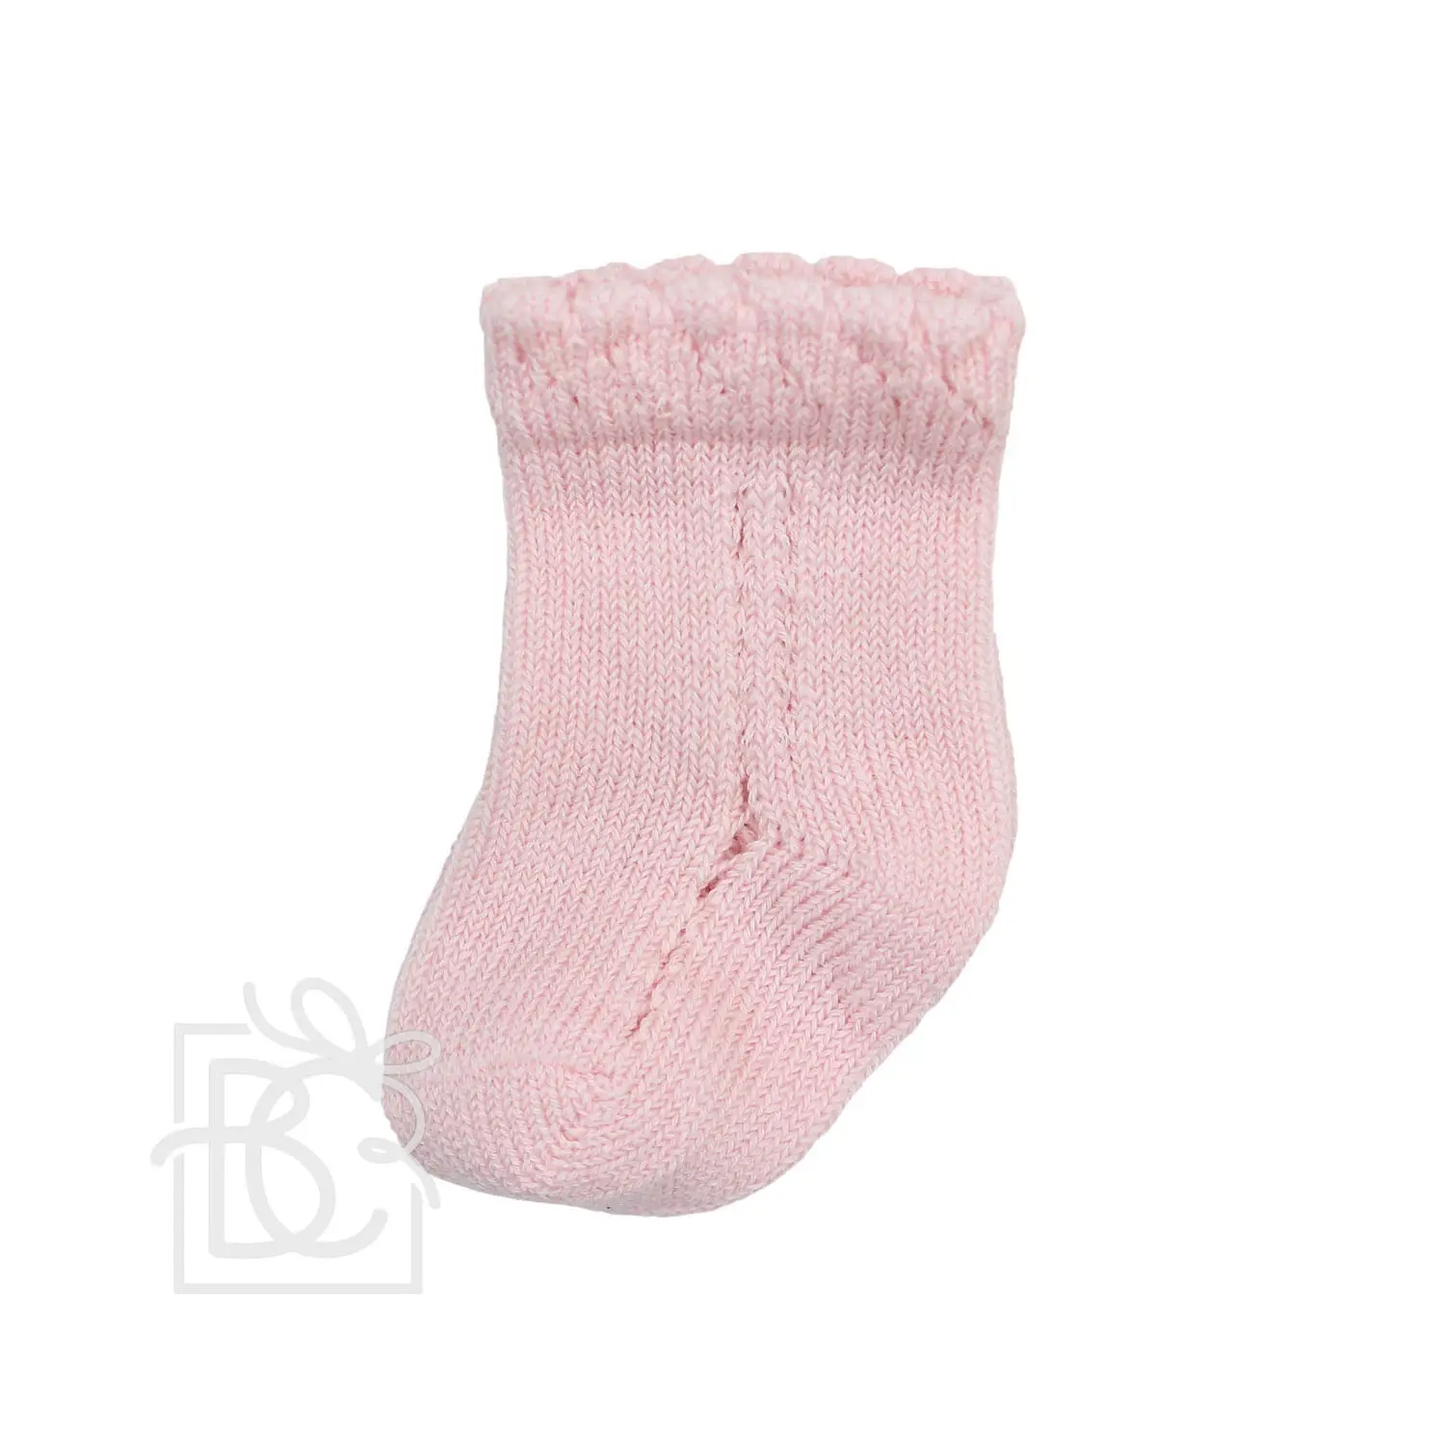 Carlomagno - Newborn Open Work Knit Socks